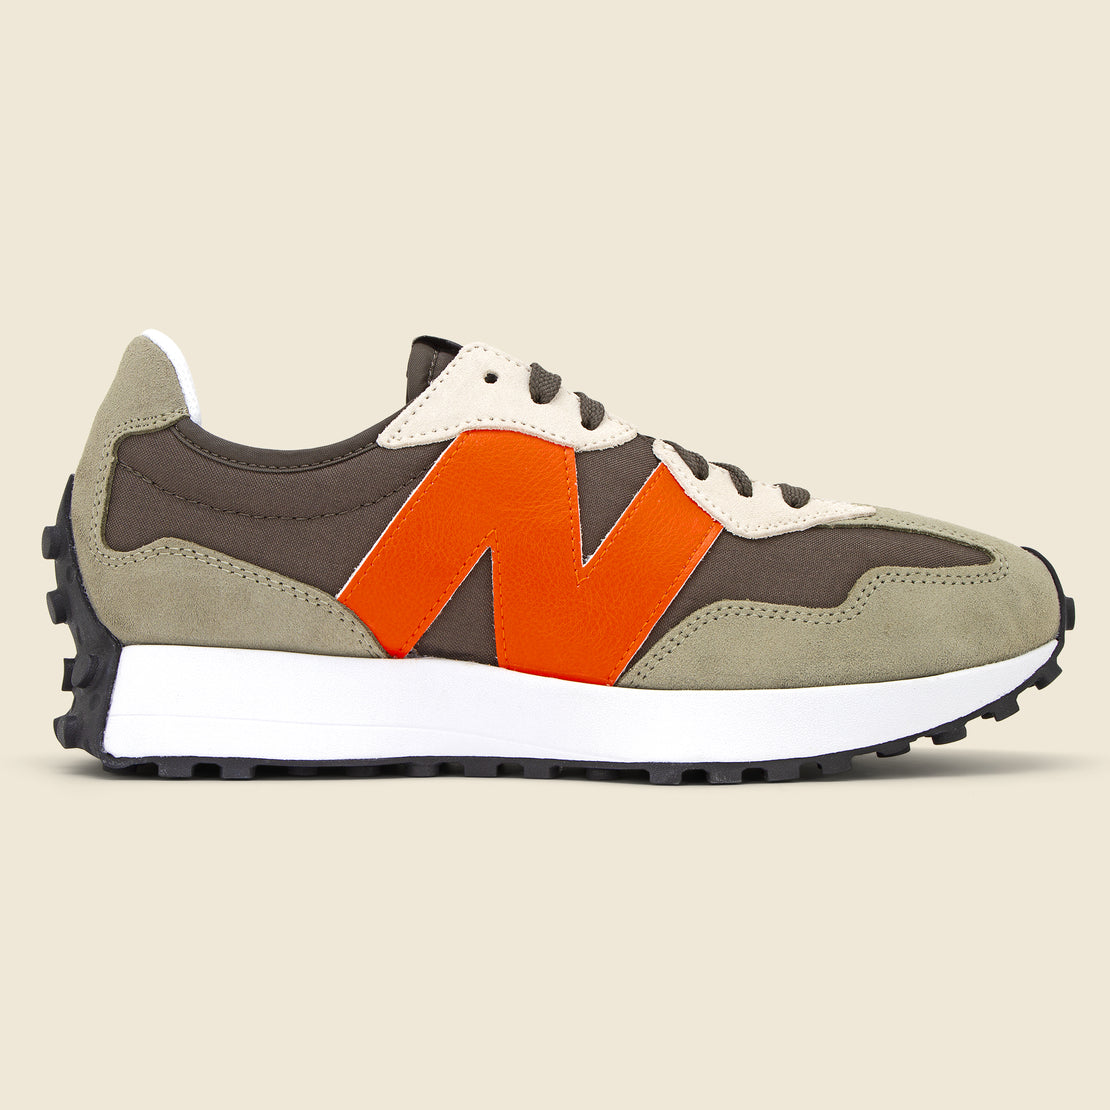 New Balance 327 Sneaker - True Camo/Vibrant Orange